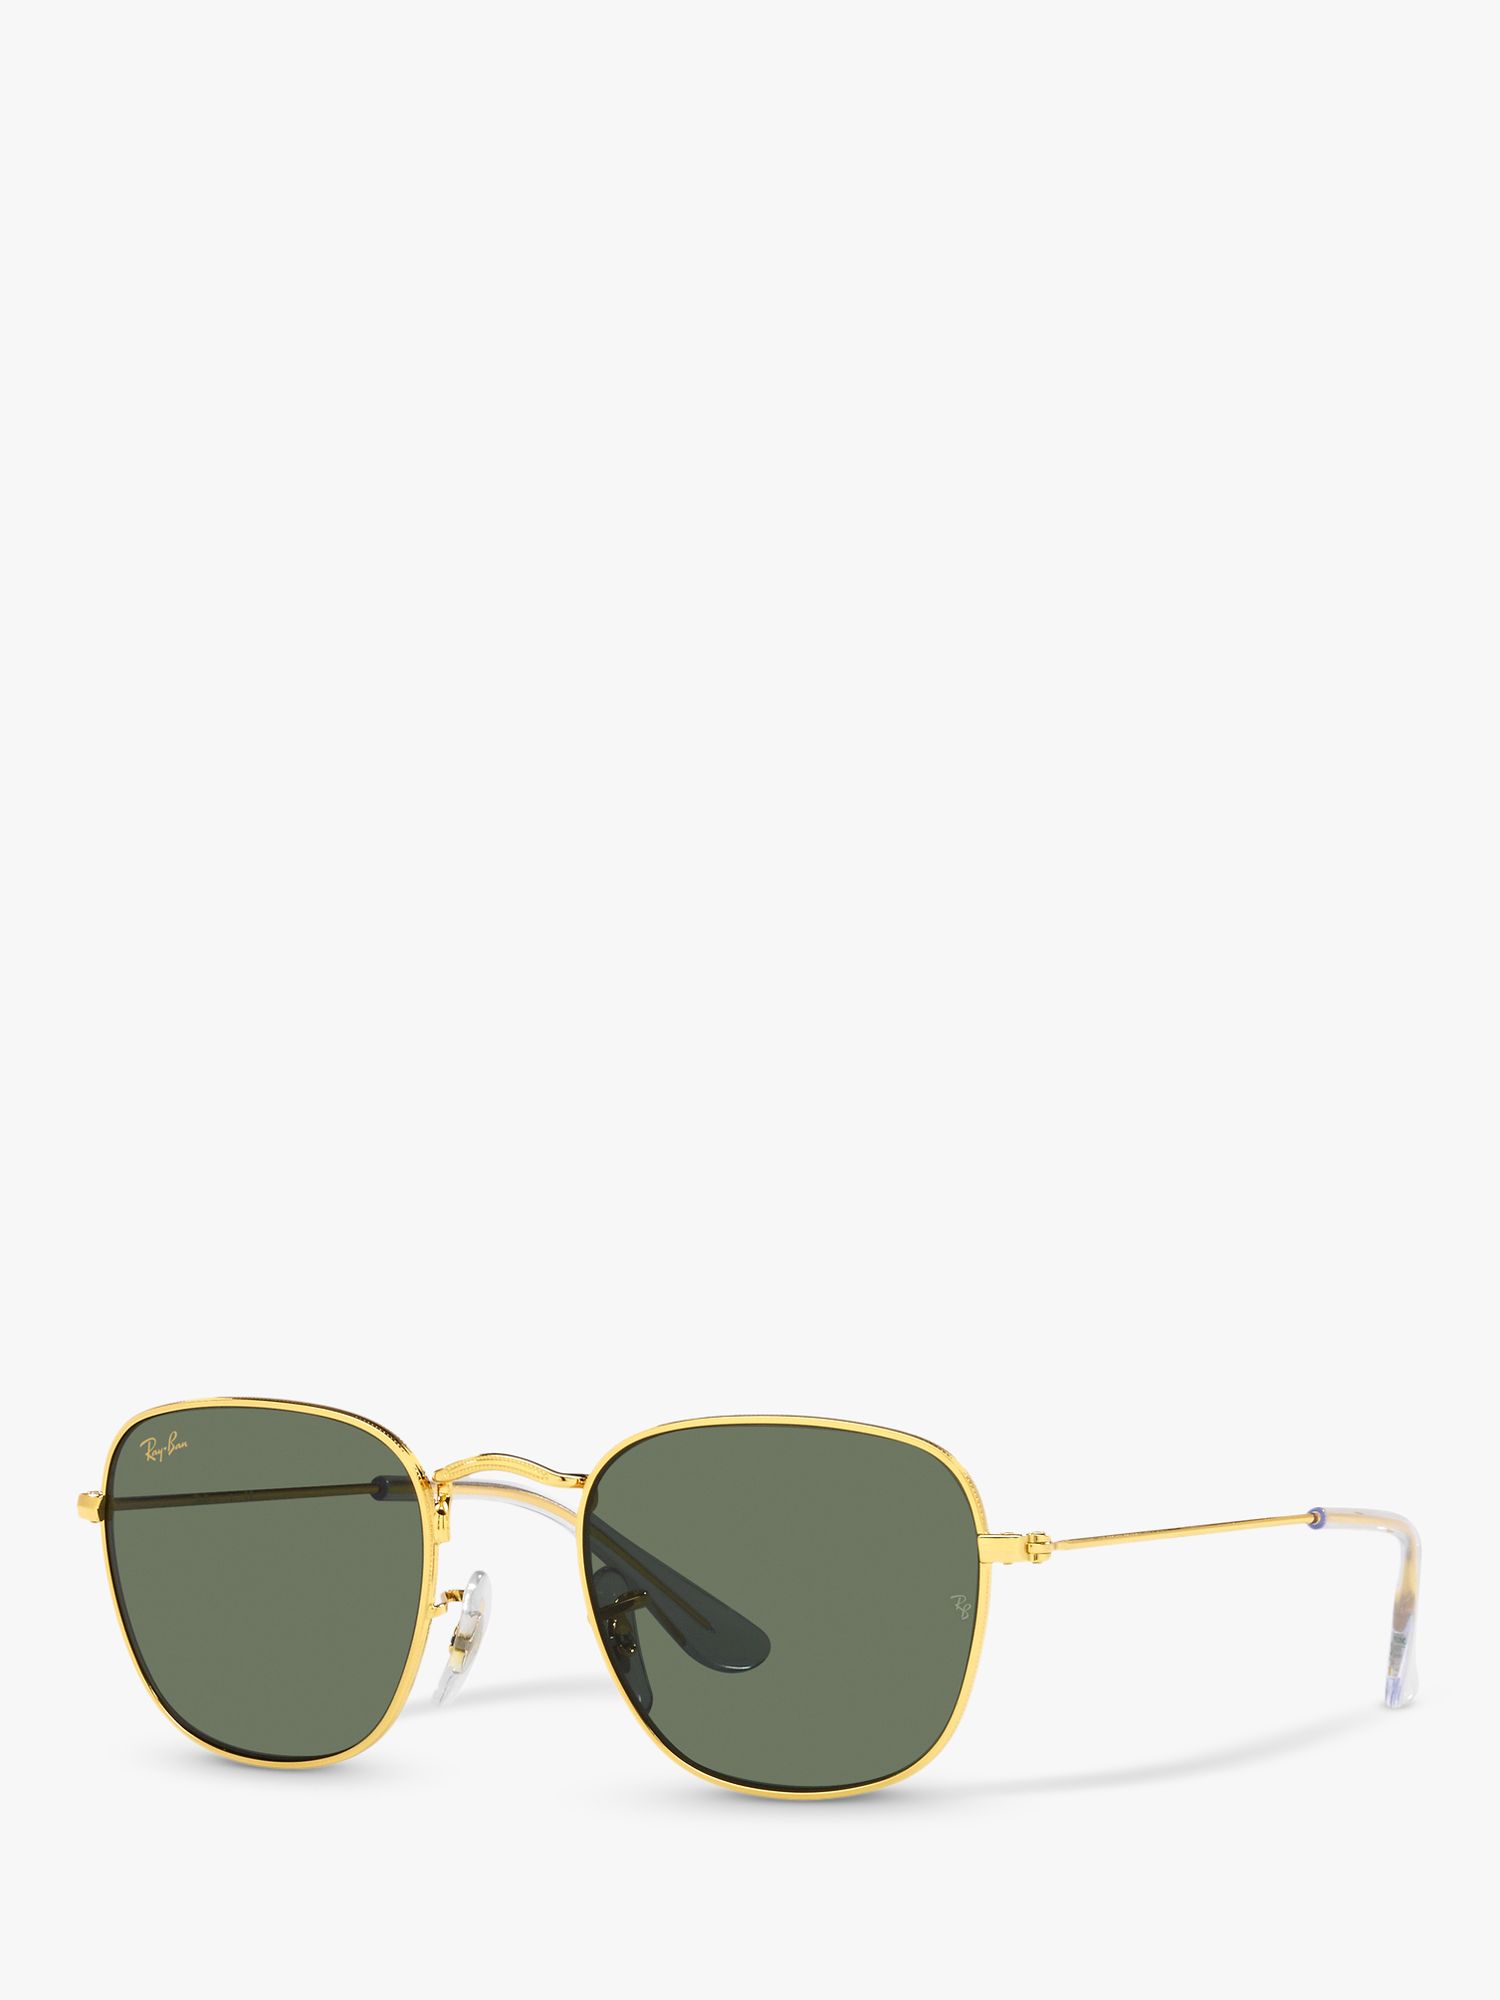 Buy Ray-Ban Junior RJ9557S Square Sunglasses, Legend Gold/Green Online at johnlewis.com